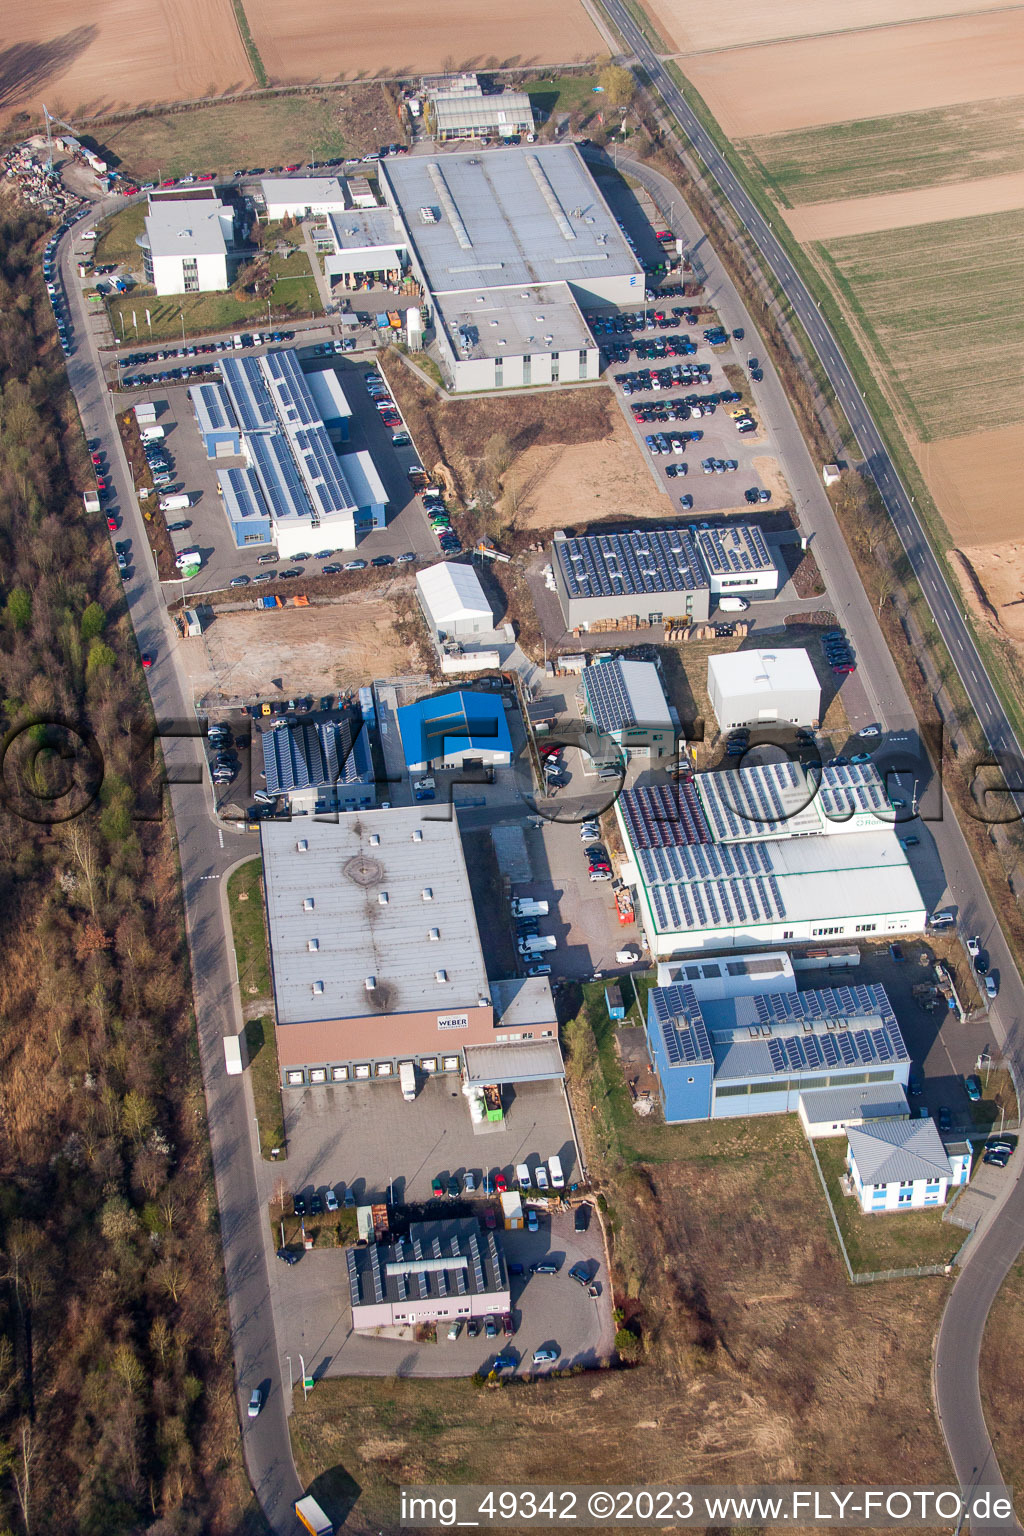 Industrial estate and company settlement with Eberspaecher catem GmbH & Co. KG in Herxheim bei Landau (Pfalz) in the state Rhineland-Palatinate, Germany